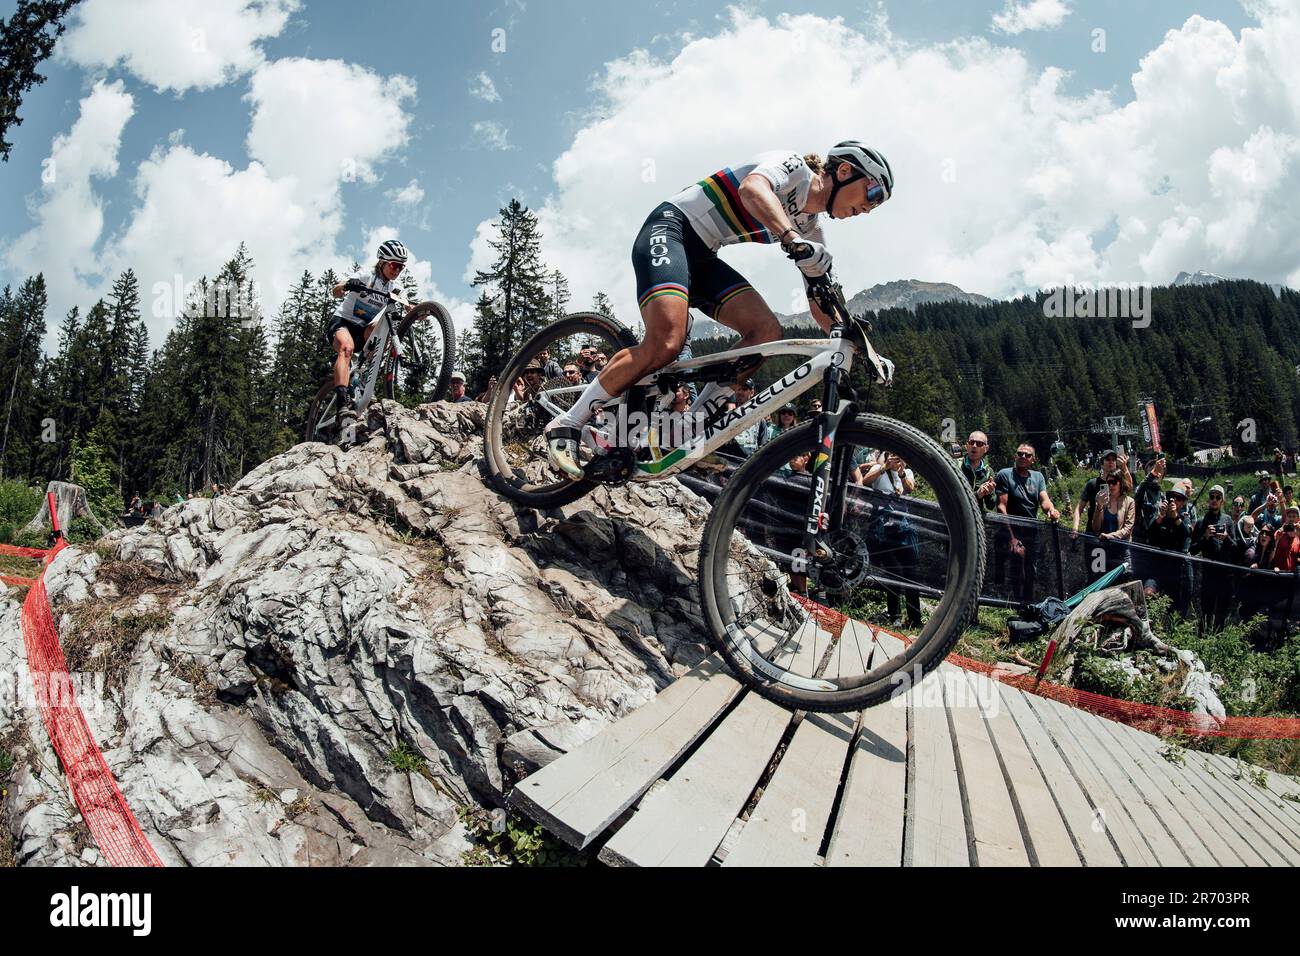 Swiss mountain bike legend Nino Schurter made history on home soil at  Lenzerheide, Switzerland on June 11 when he won to pass Frenchman Julien  Absalon for the most career UCI Mountain Bike